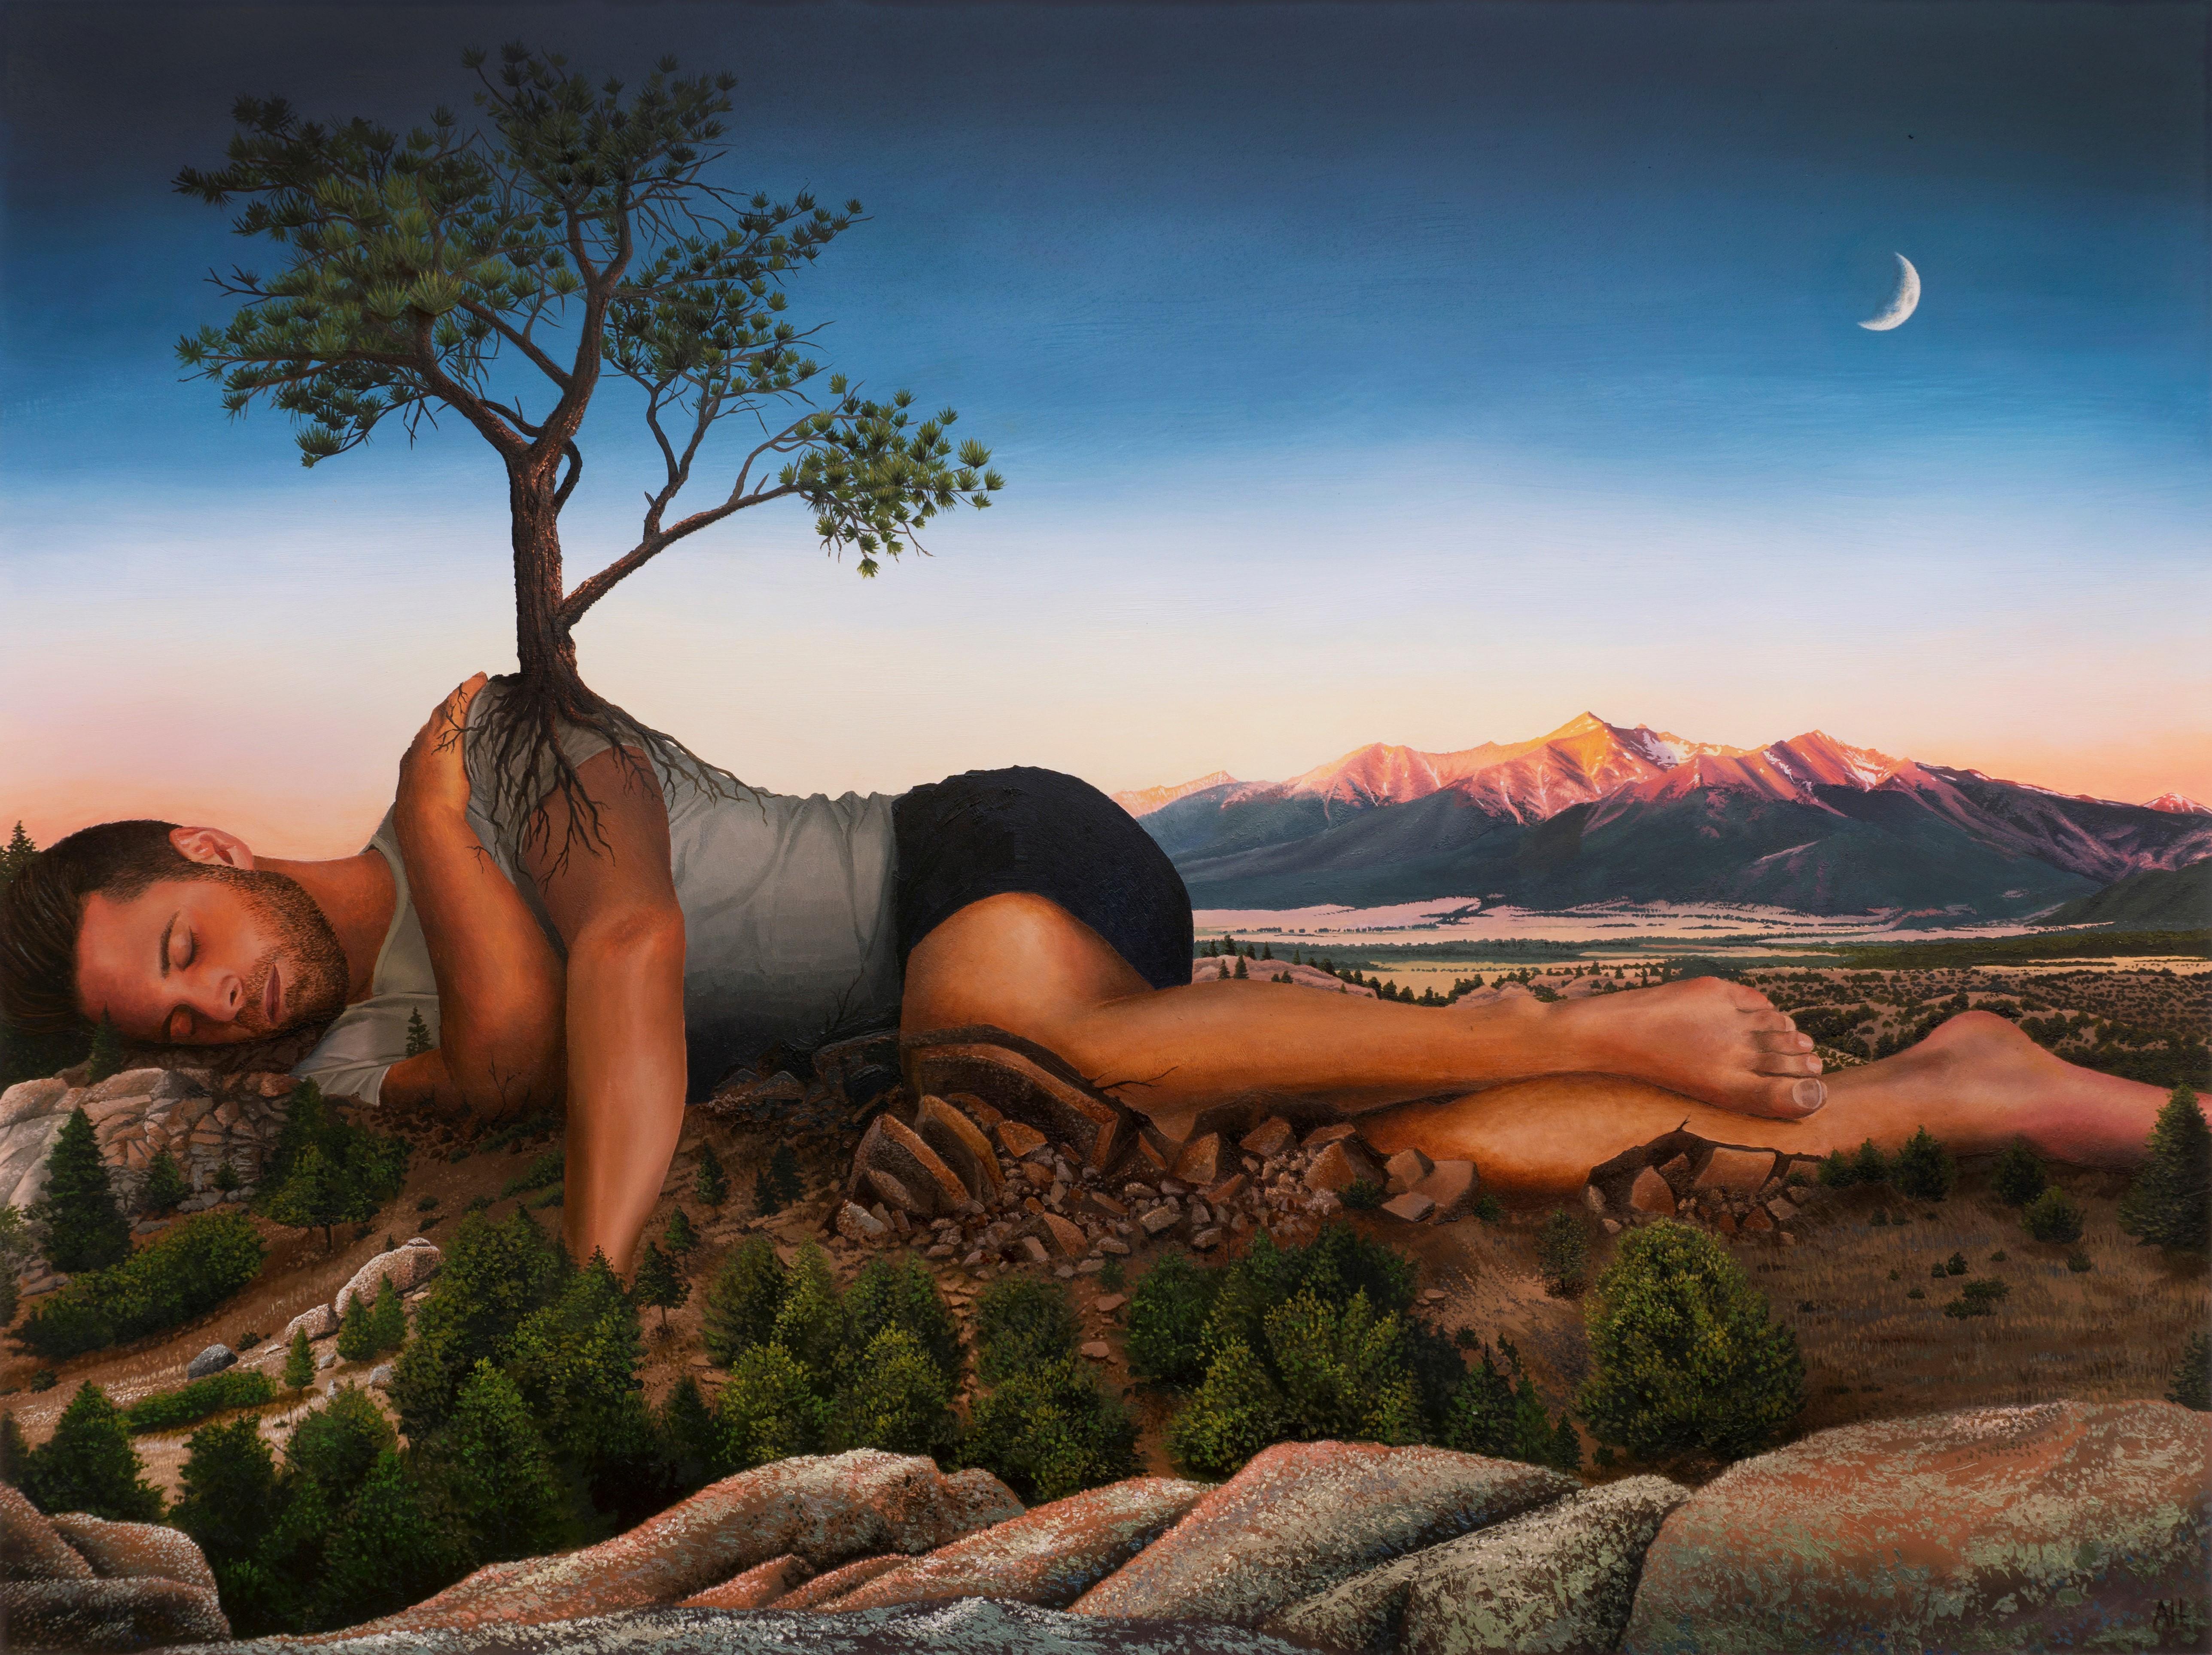 Austin Howlett Landscape Painting - "The Lost Traveler" Oil painting